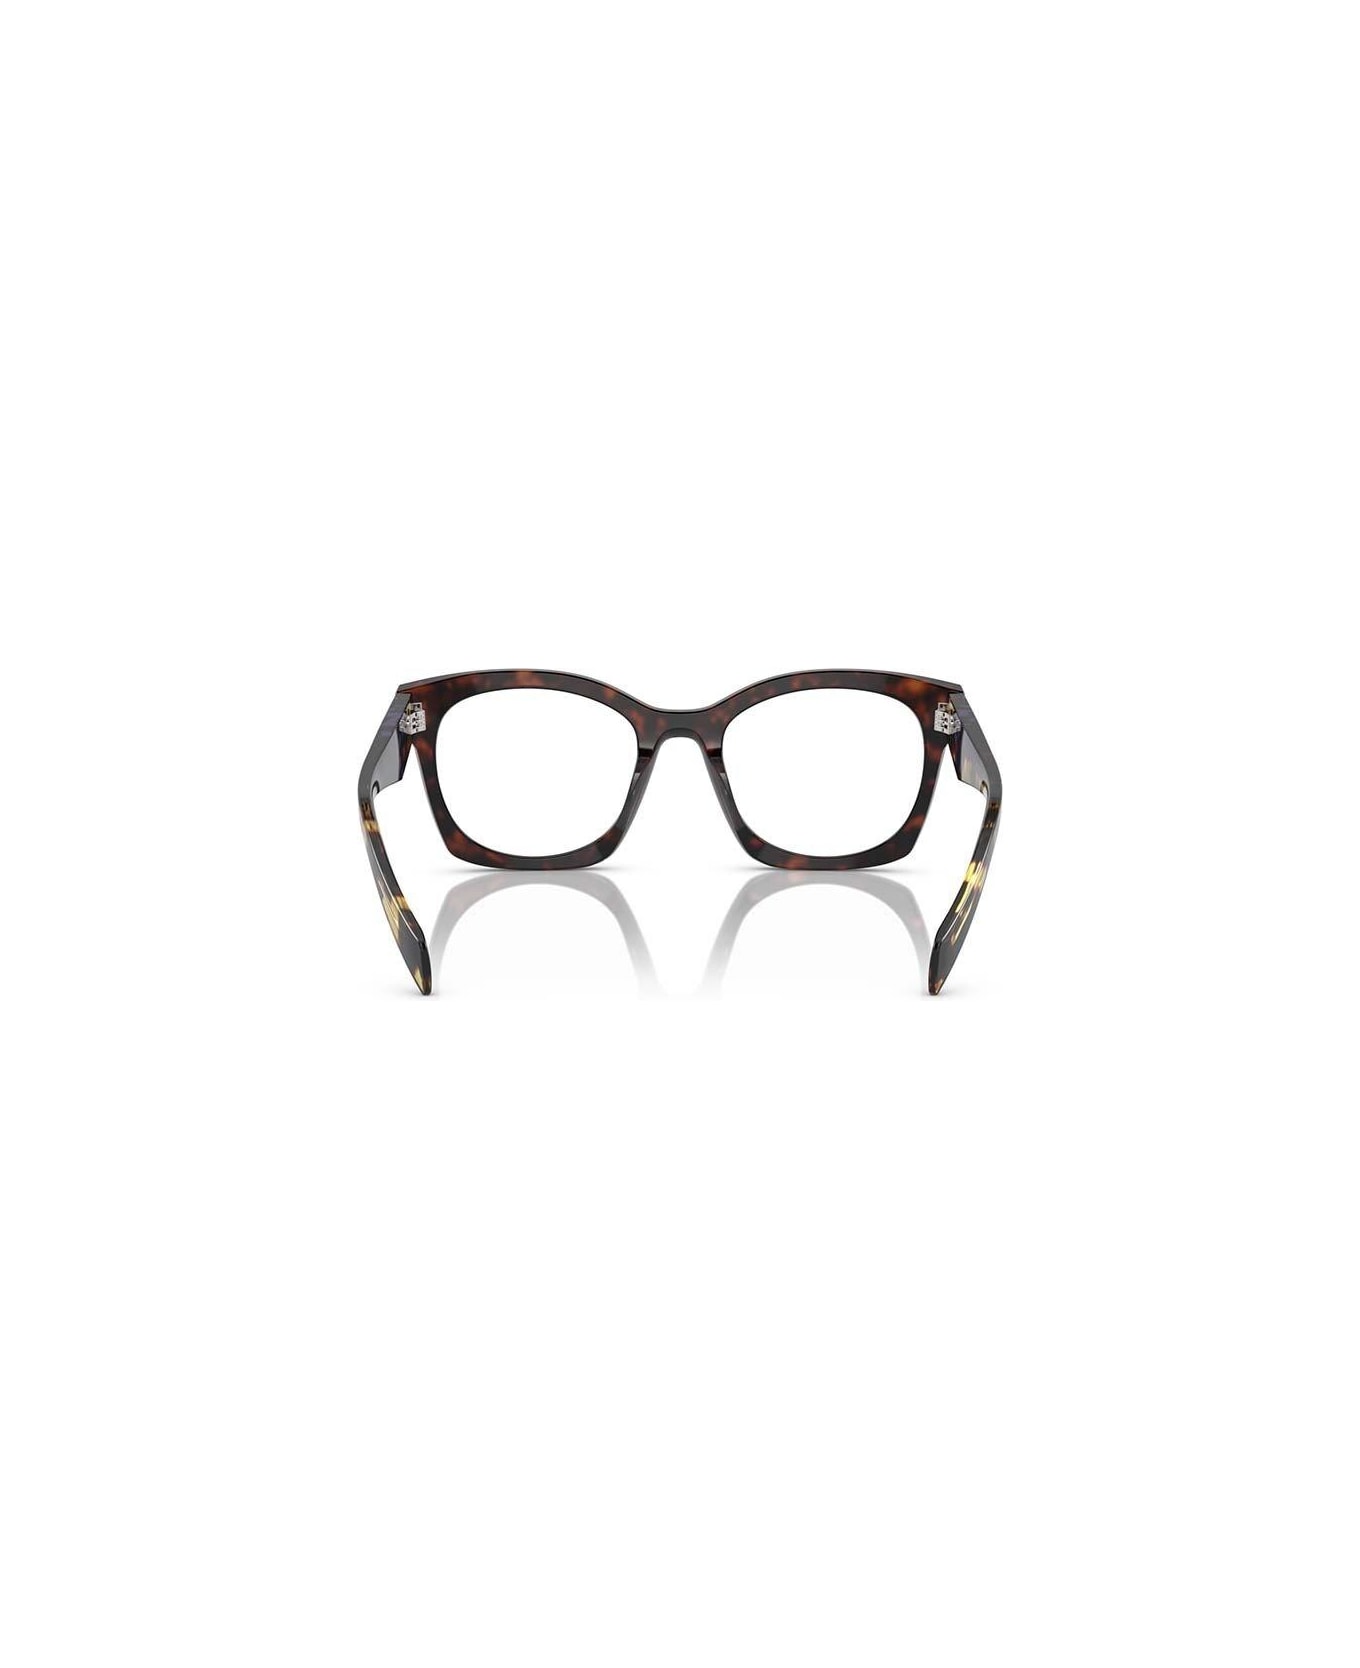 Prada Eyewear D-frame Glasses - 17N1O1